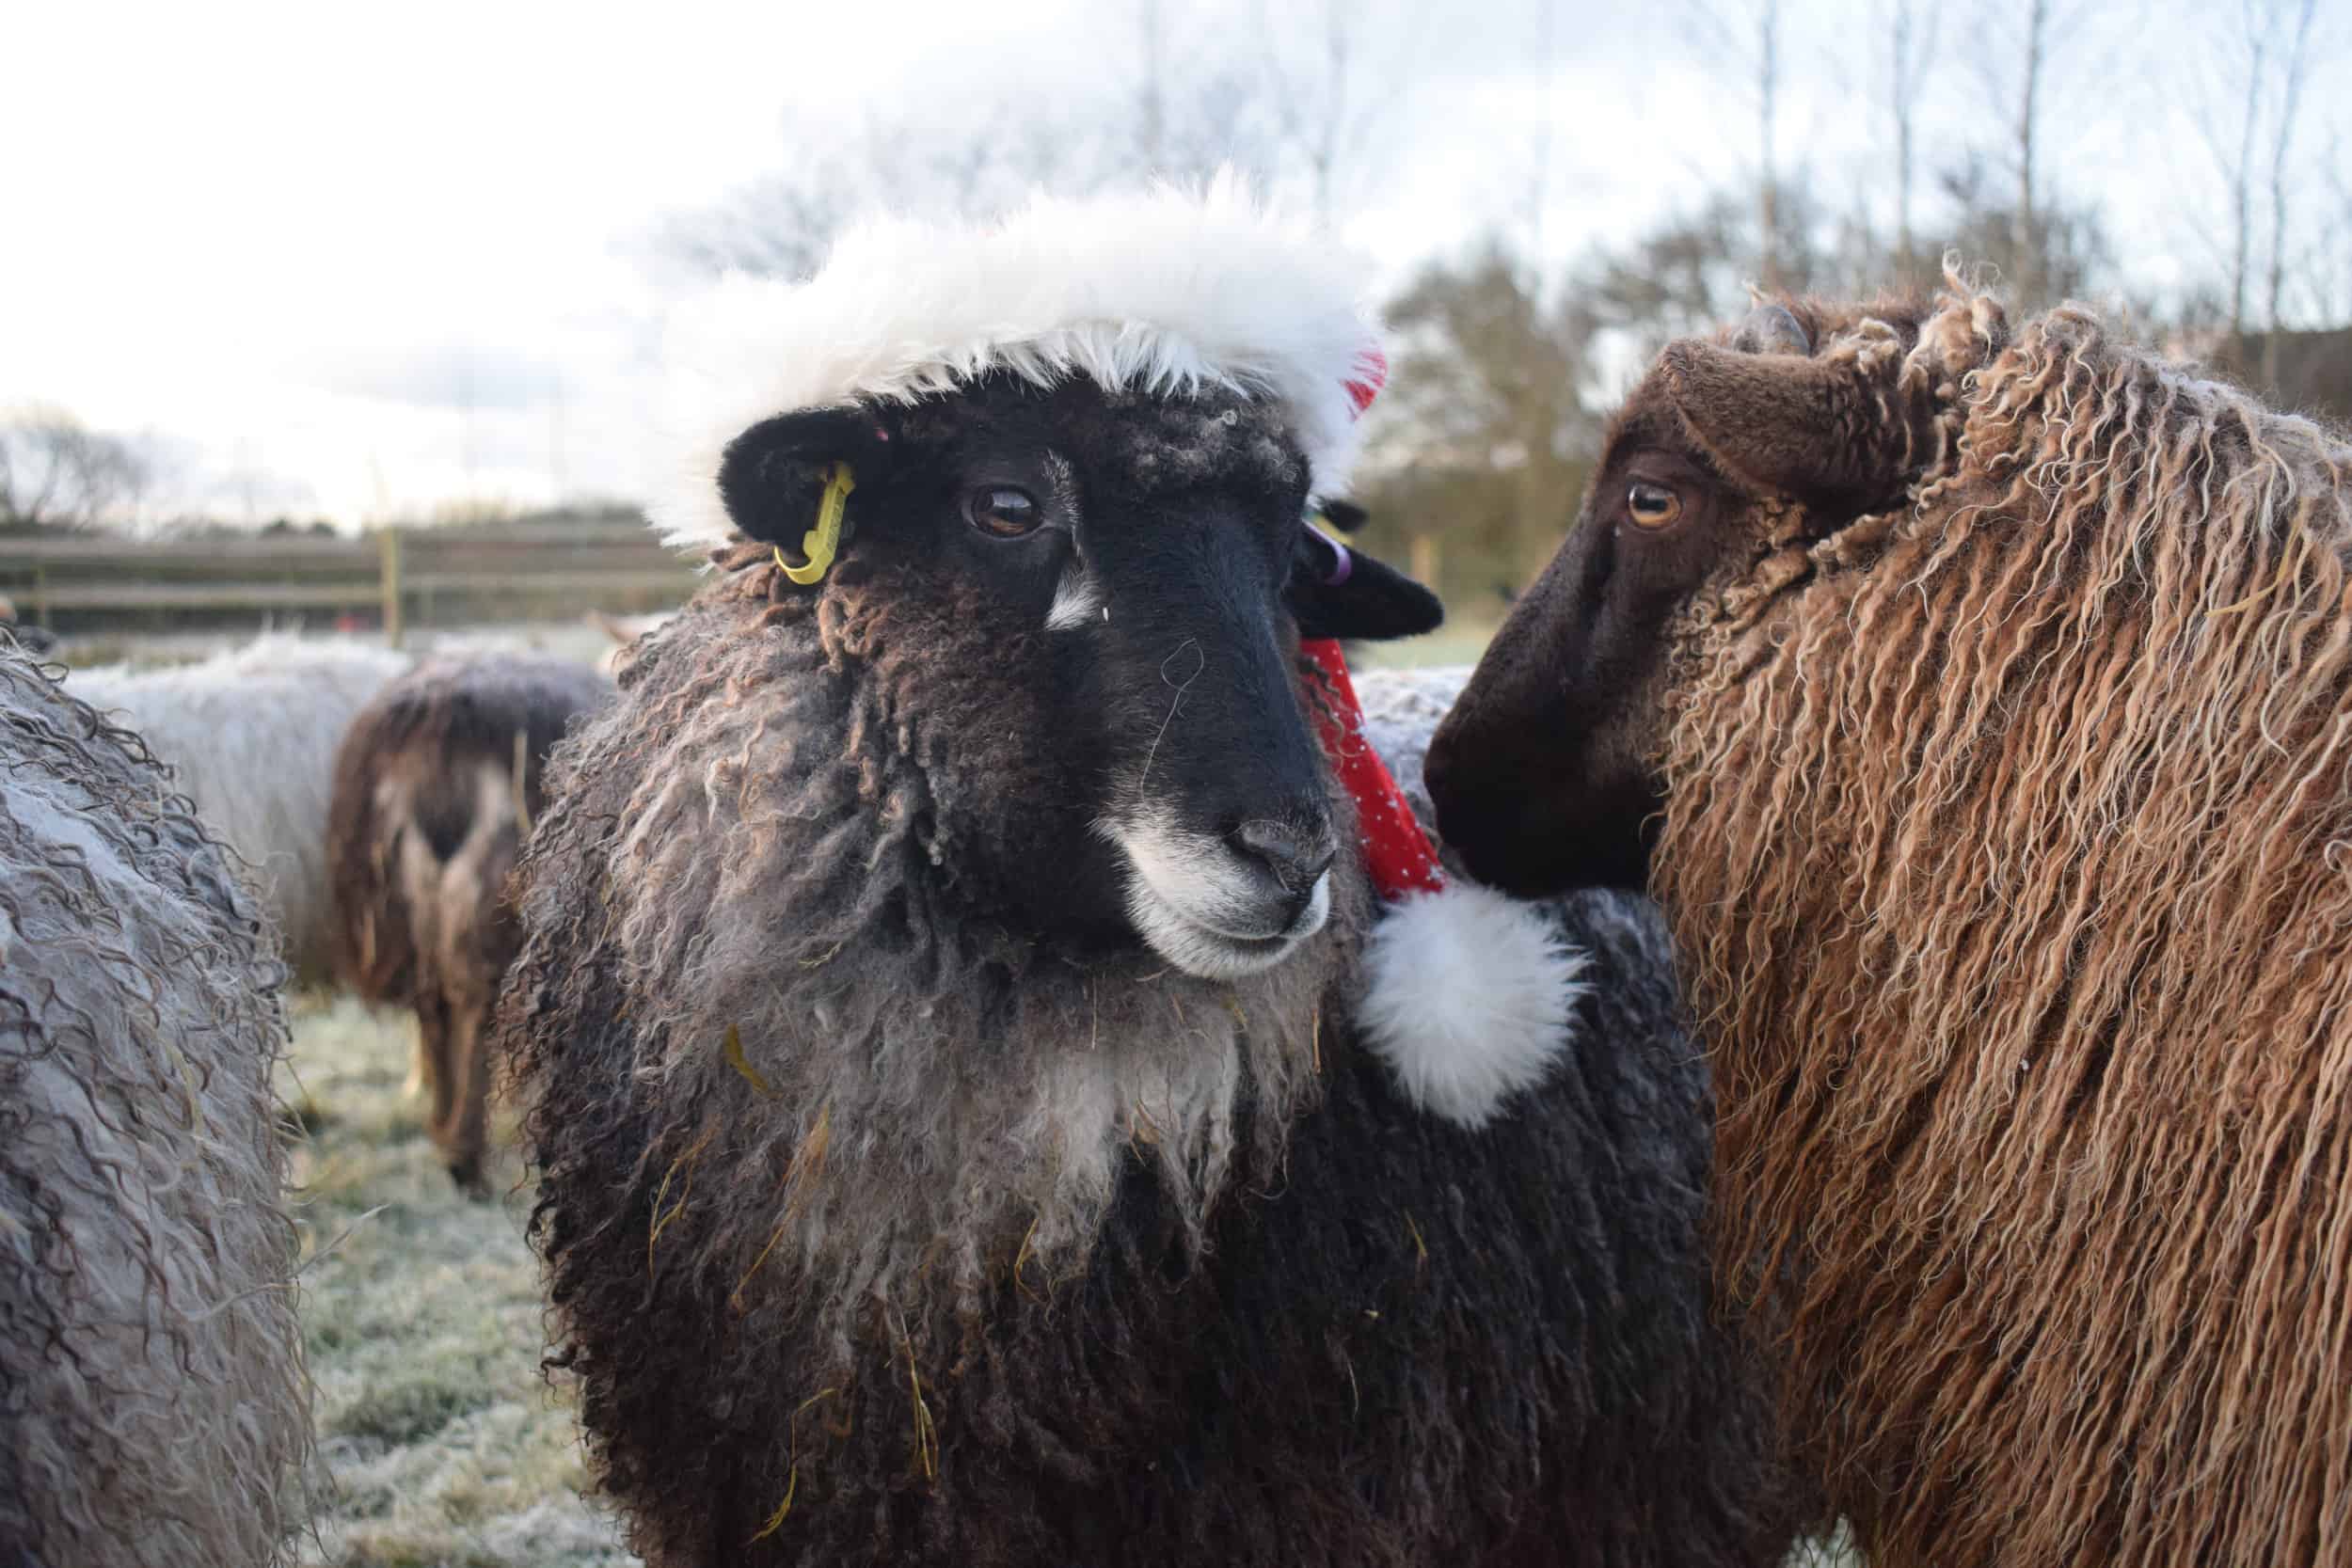 florence humphrey sheep xmas santa hat coloured leicester longwool gotland shetland sheep crossbreed english blue kind fibre